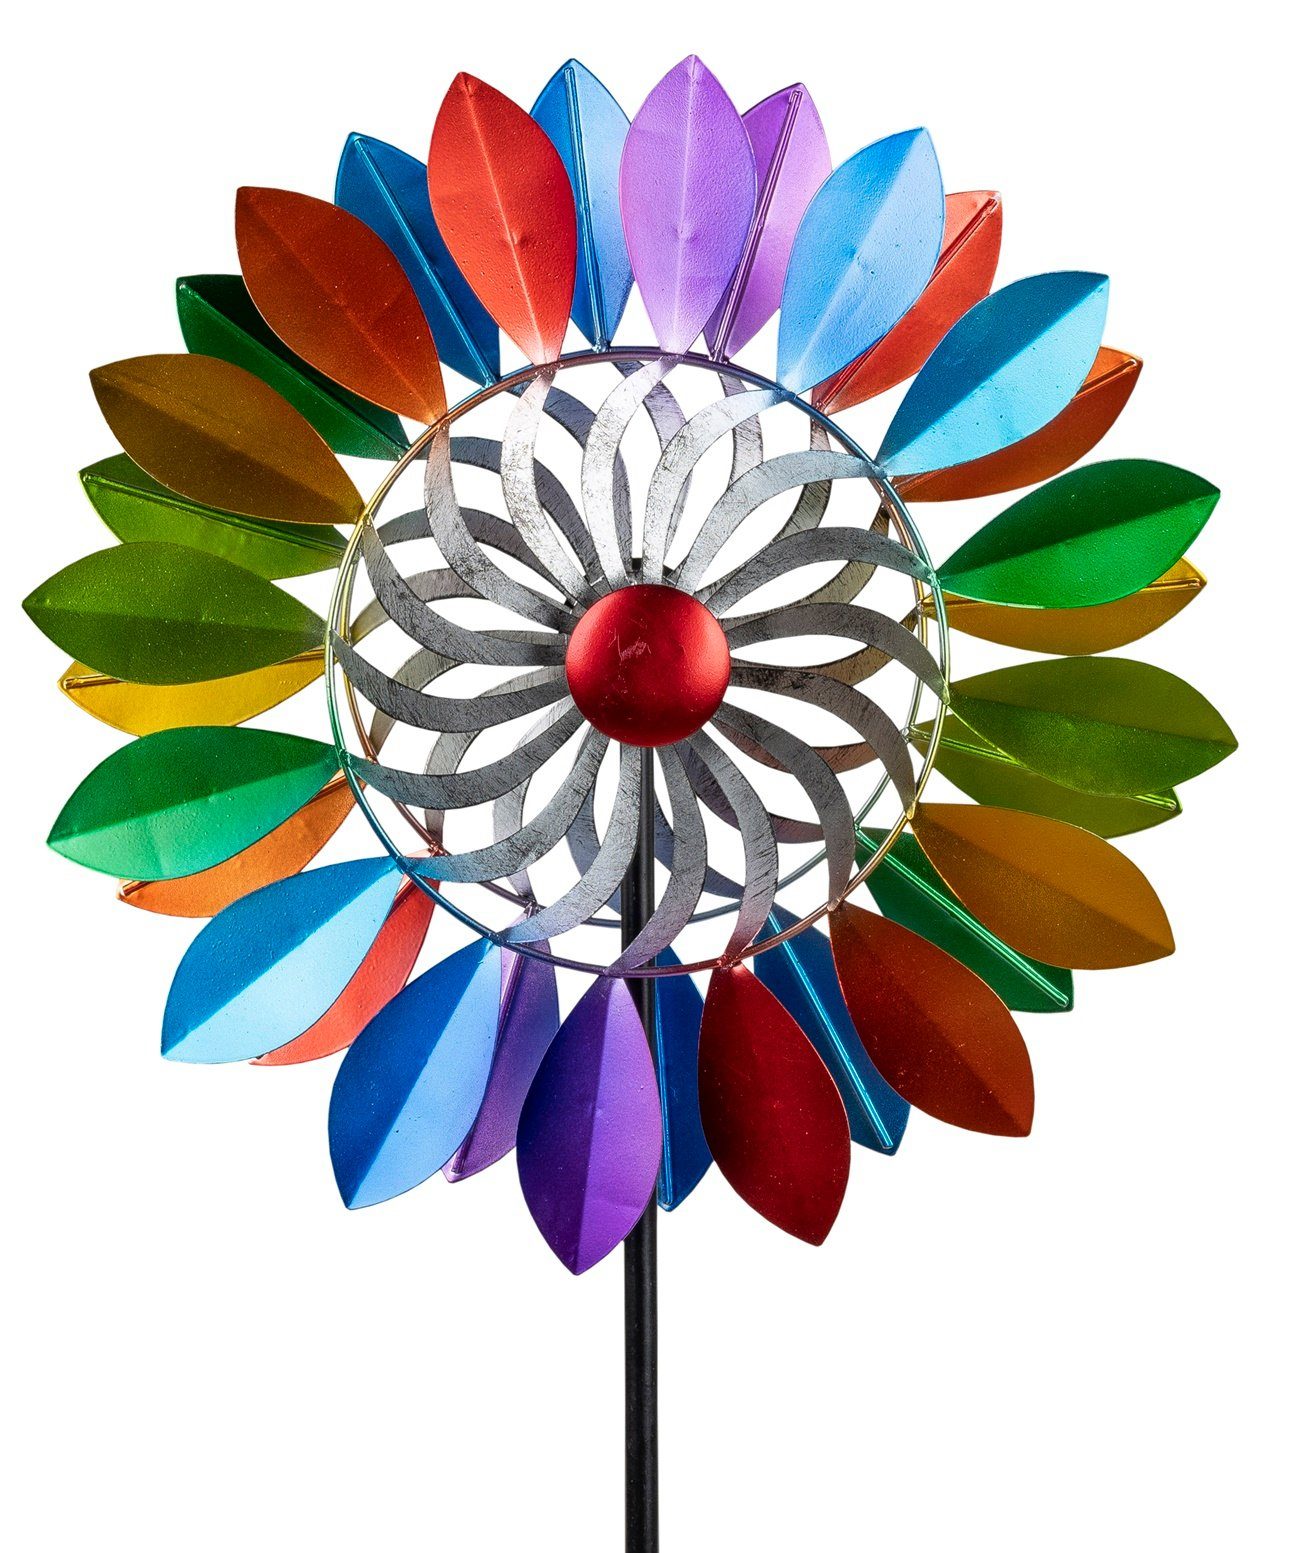 dekojohnson Deko-Windrad Windrad Blume Regenbogen Metall Gartendeko 34x126cm (kein Set)